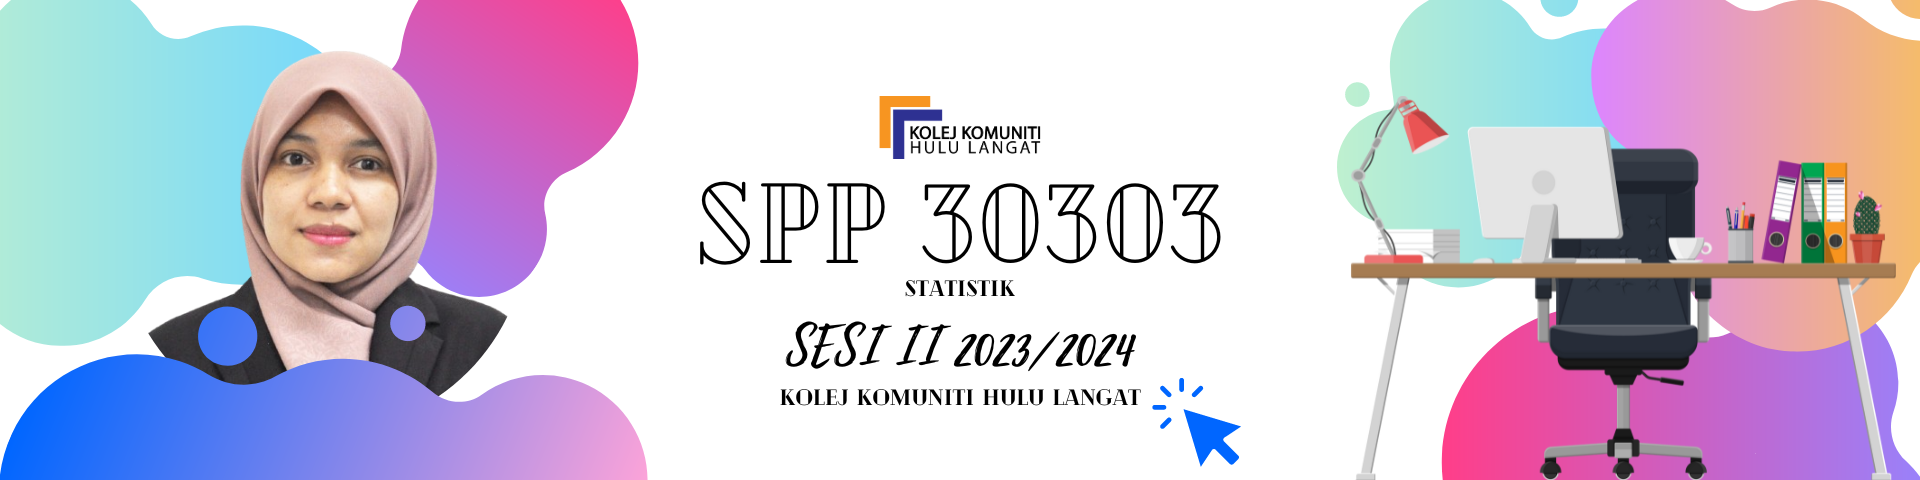 KKHL | SPP30303 STATISTIK